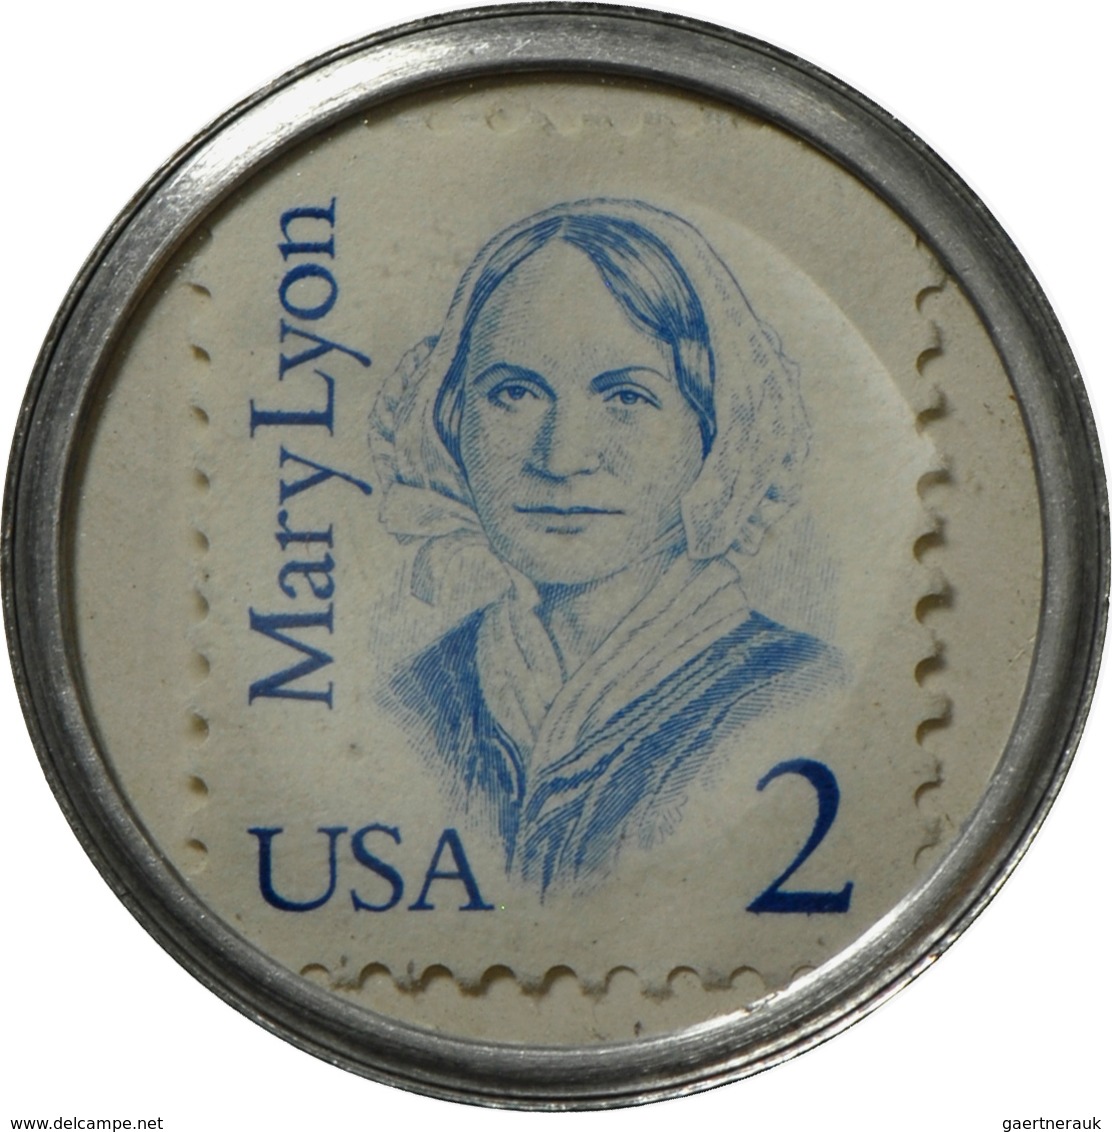 Vereinigte Staaten von Amerika: Lot 60 pcs; Encased Postage Stamps, after 1862, different kinds of c